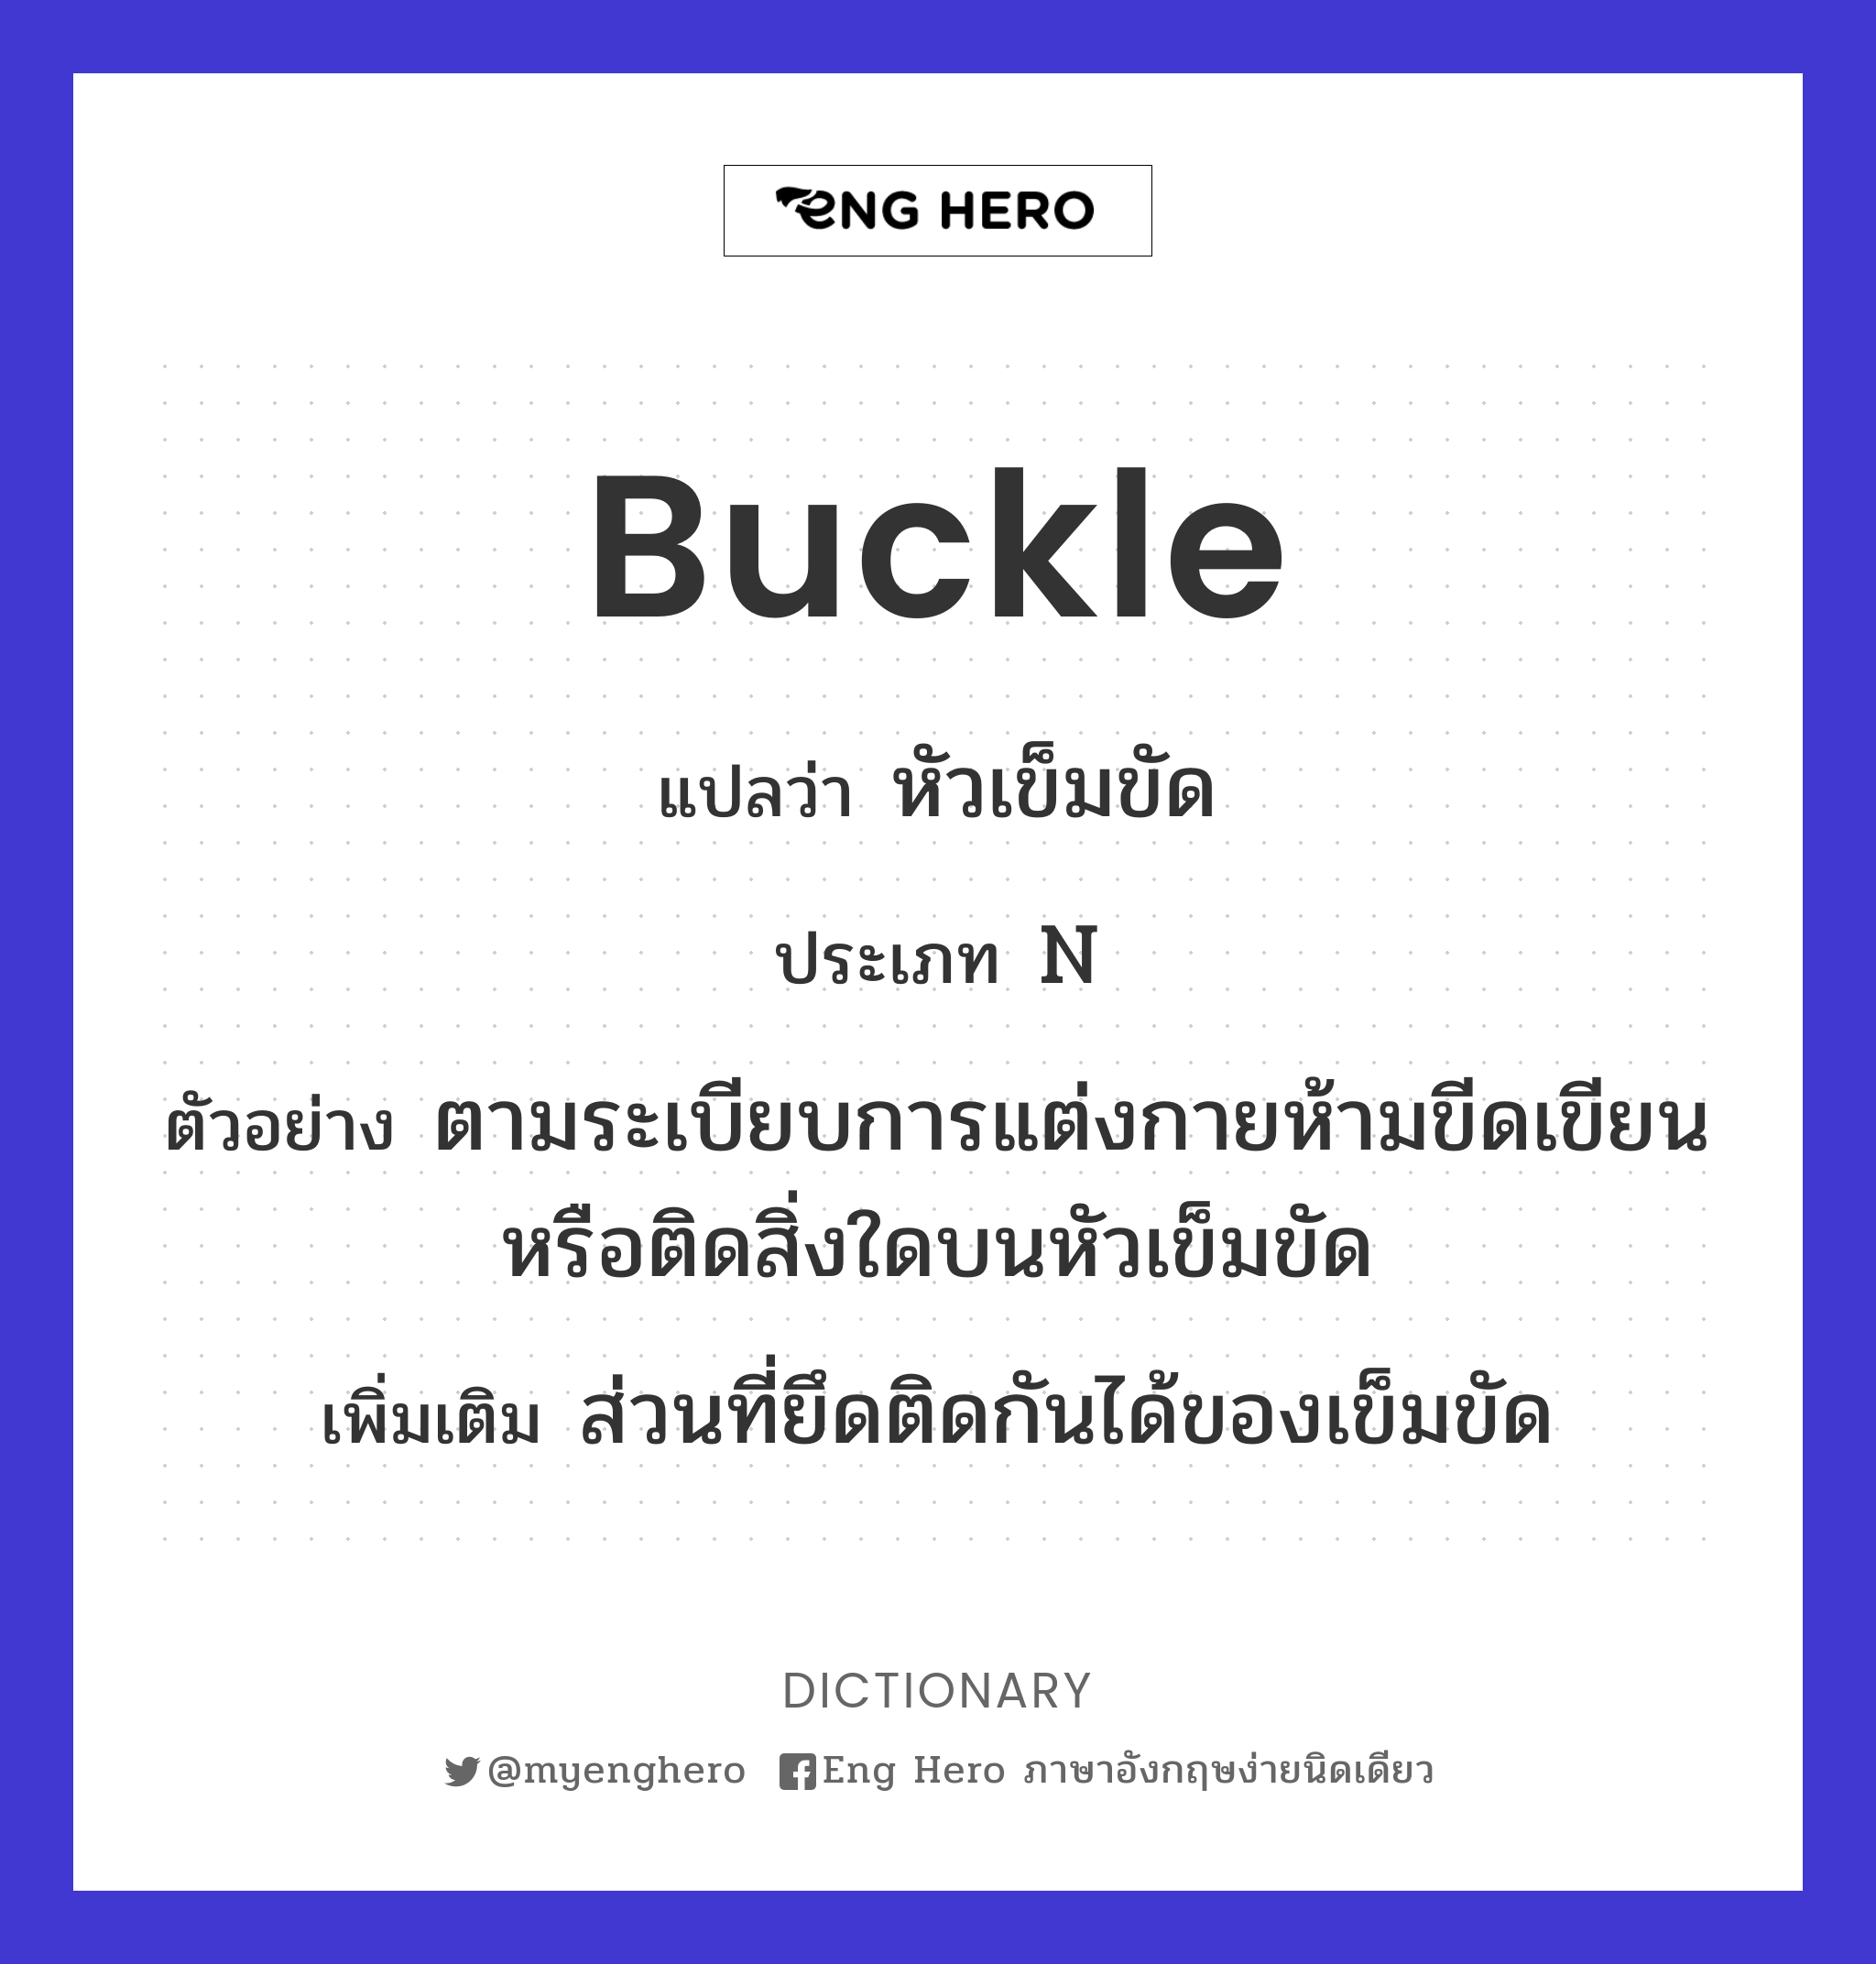 buckle